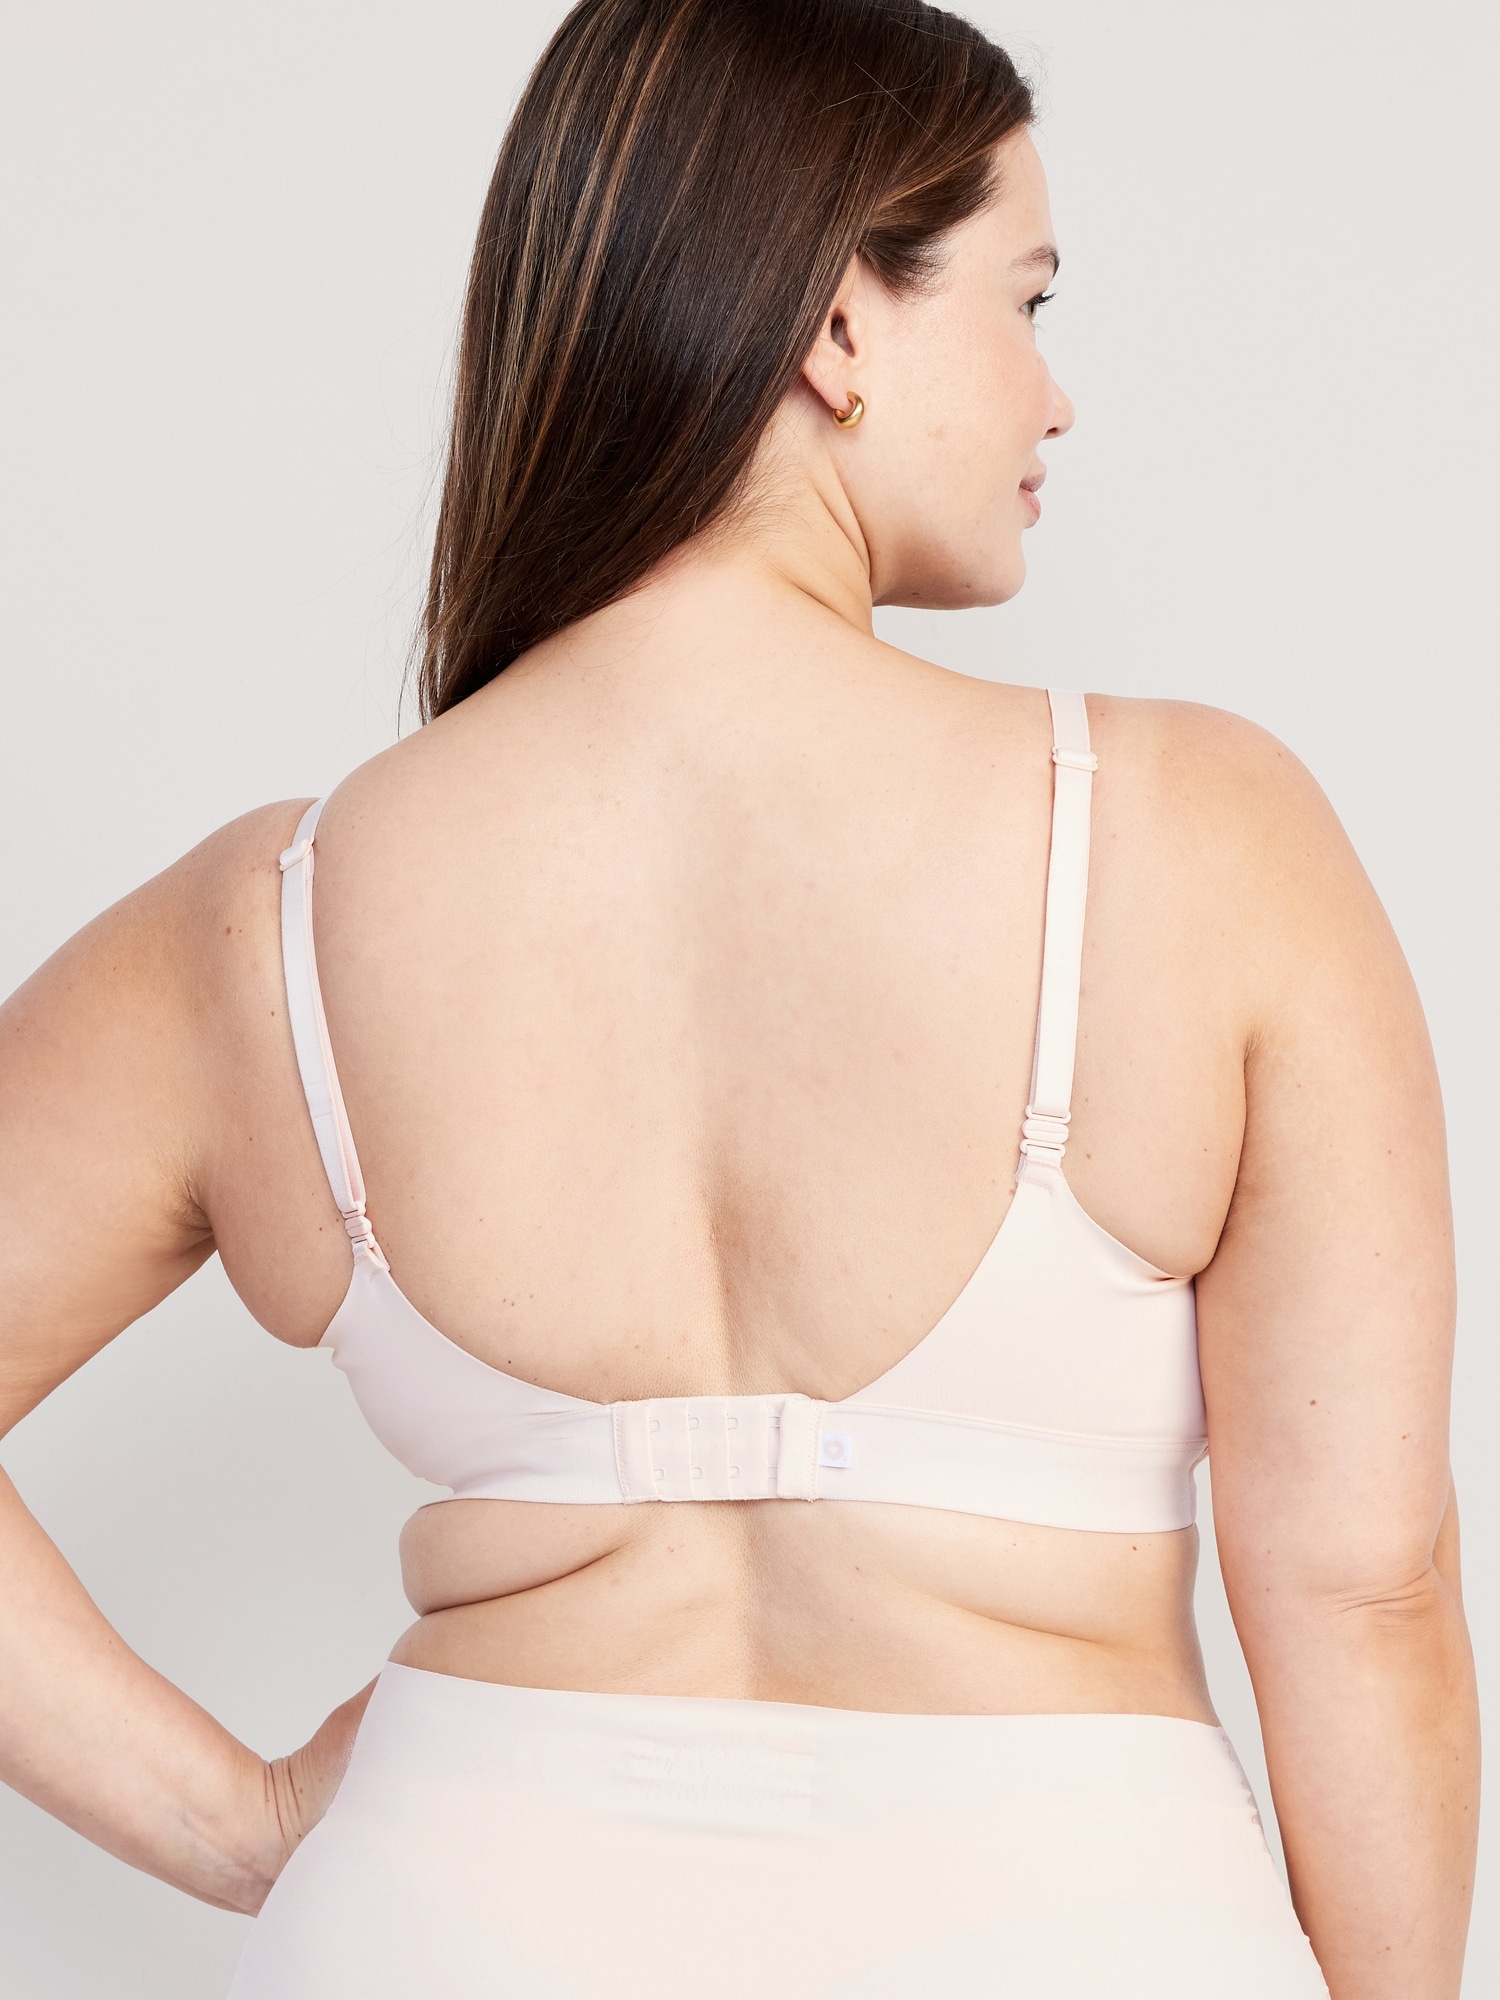 808 NEW Design wireless bra big size (cup B)w/ lining & high quality for  women's underwear